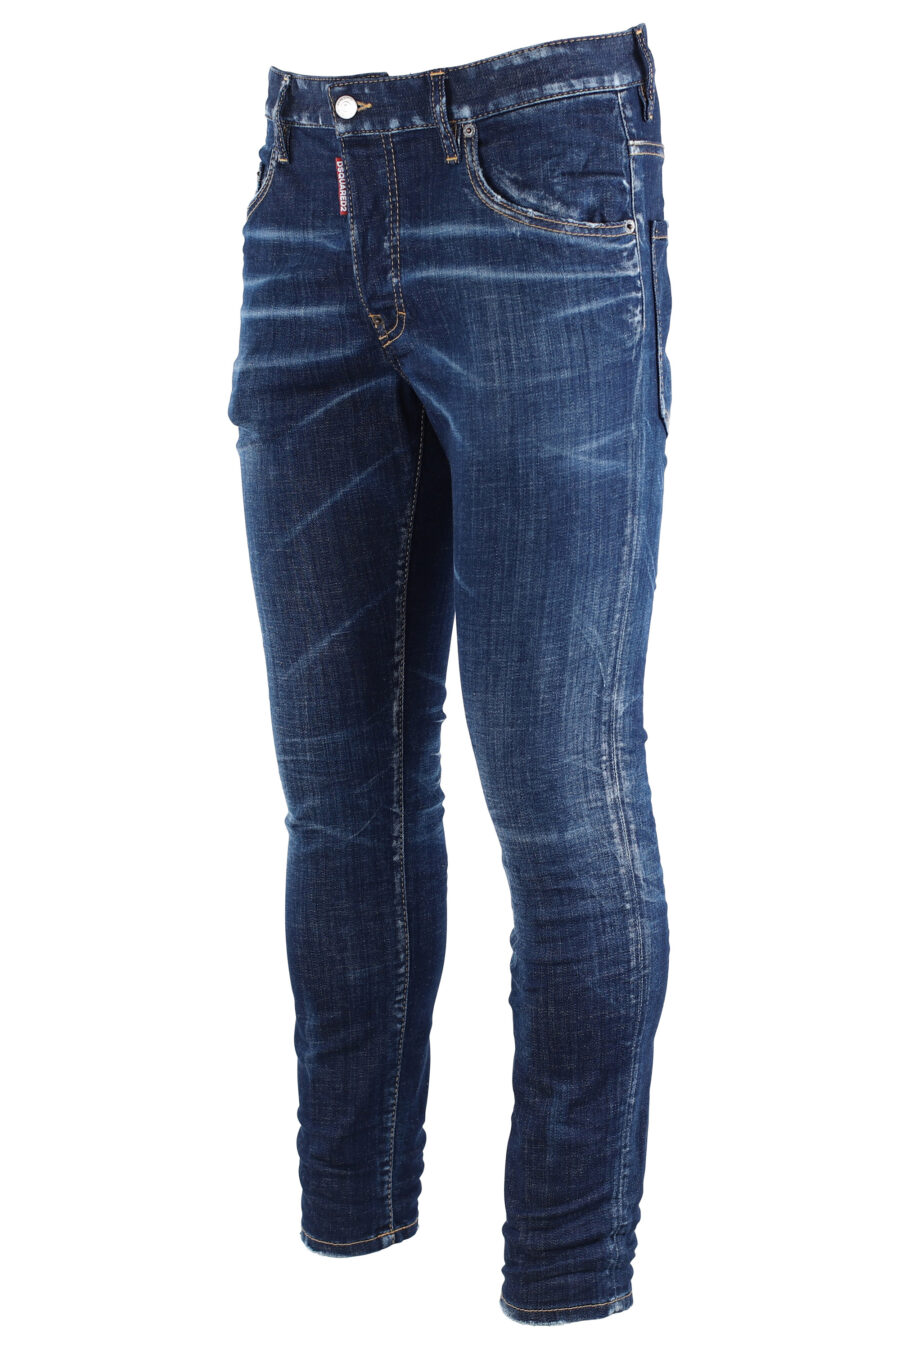 Pantalon en denim "24 seven skater jean" bleu semi-usé - IMG 1614